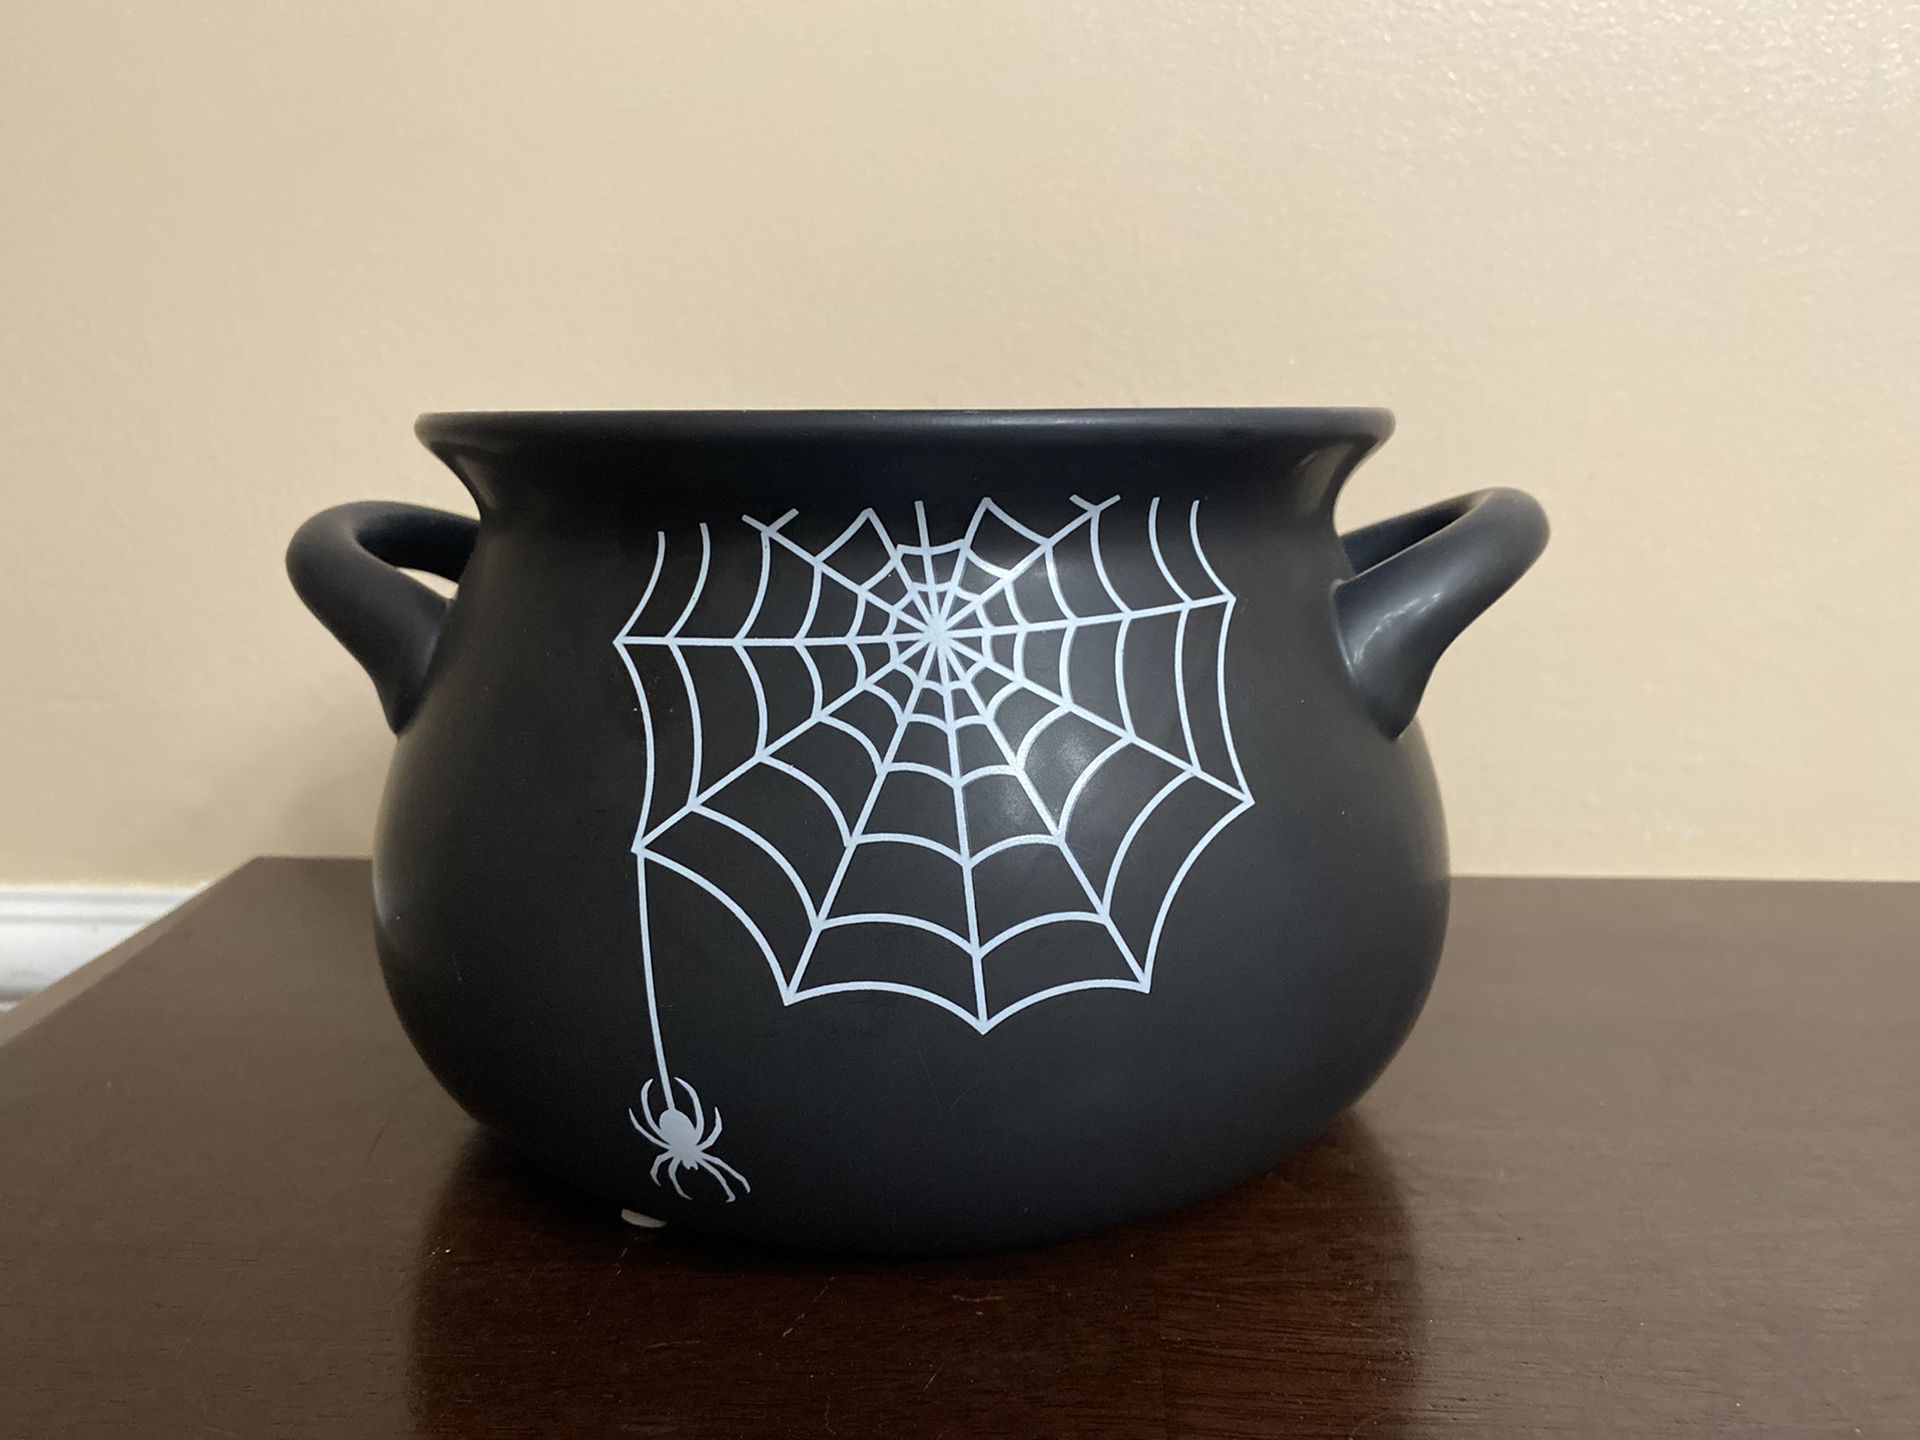 Spider Web Cauldron